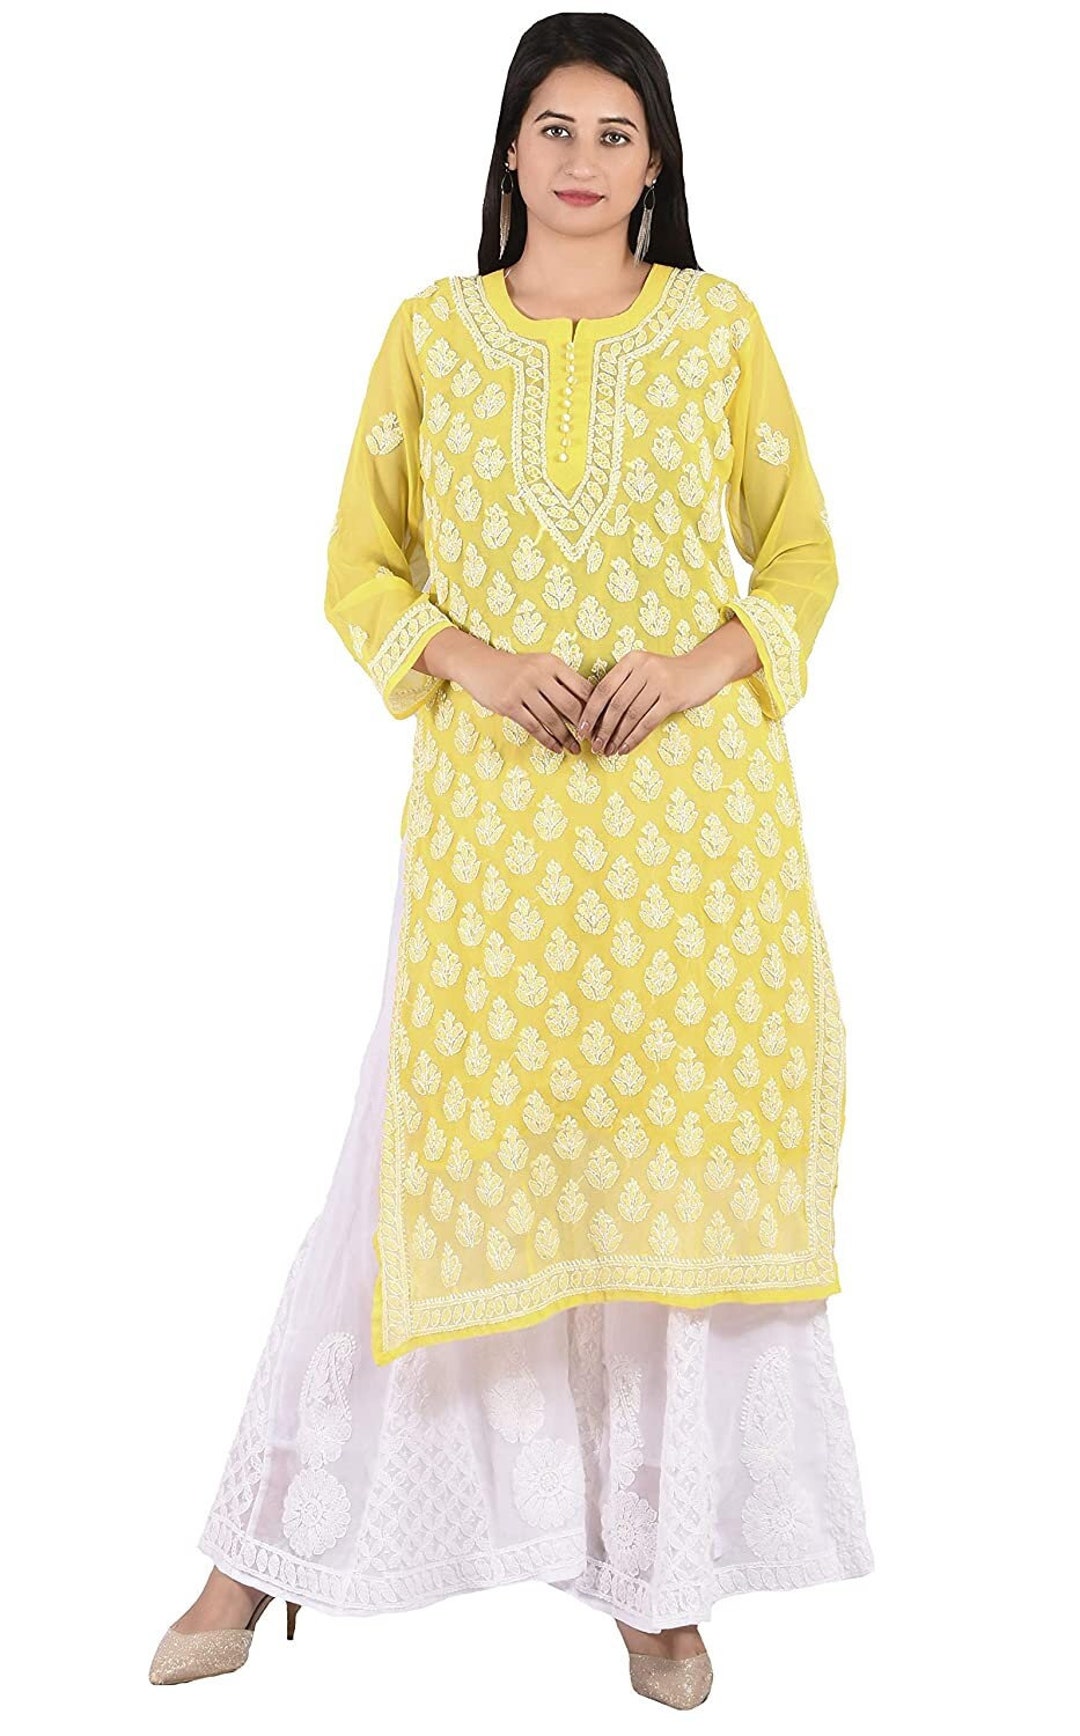 2020 Latest #Yellow #Dresses Design|Yellow Kurti Design|Yellow Lehenga  Design|Yellow Palazzo Suit - YouTube